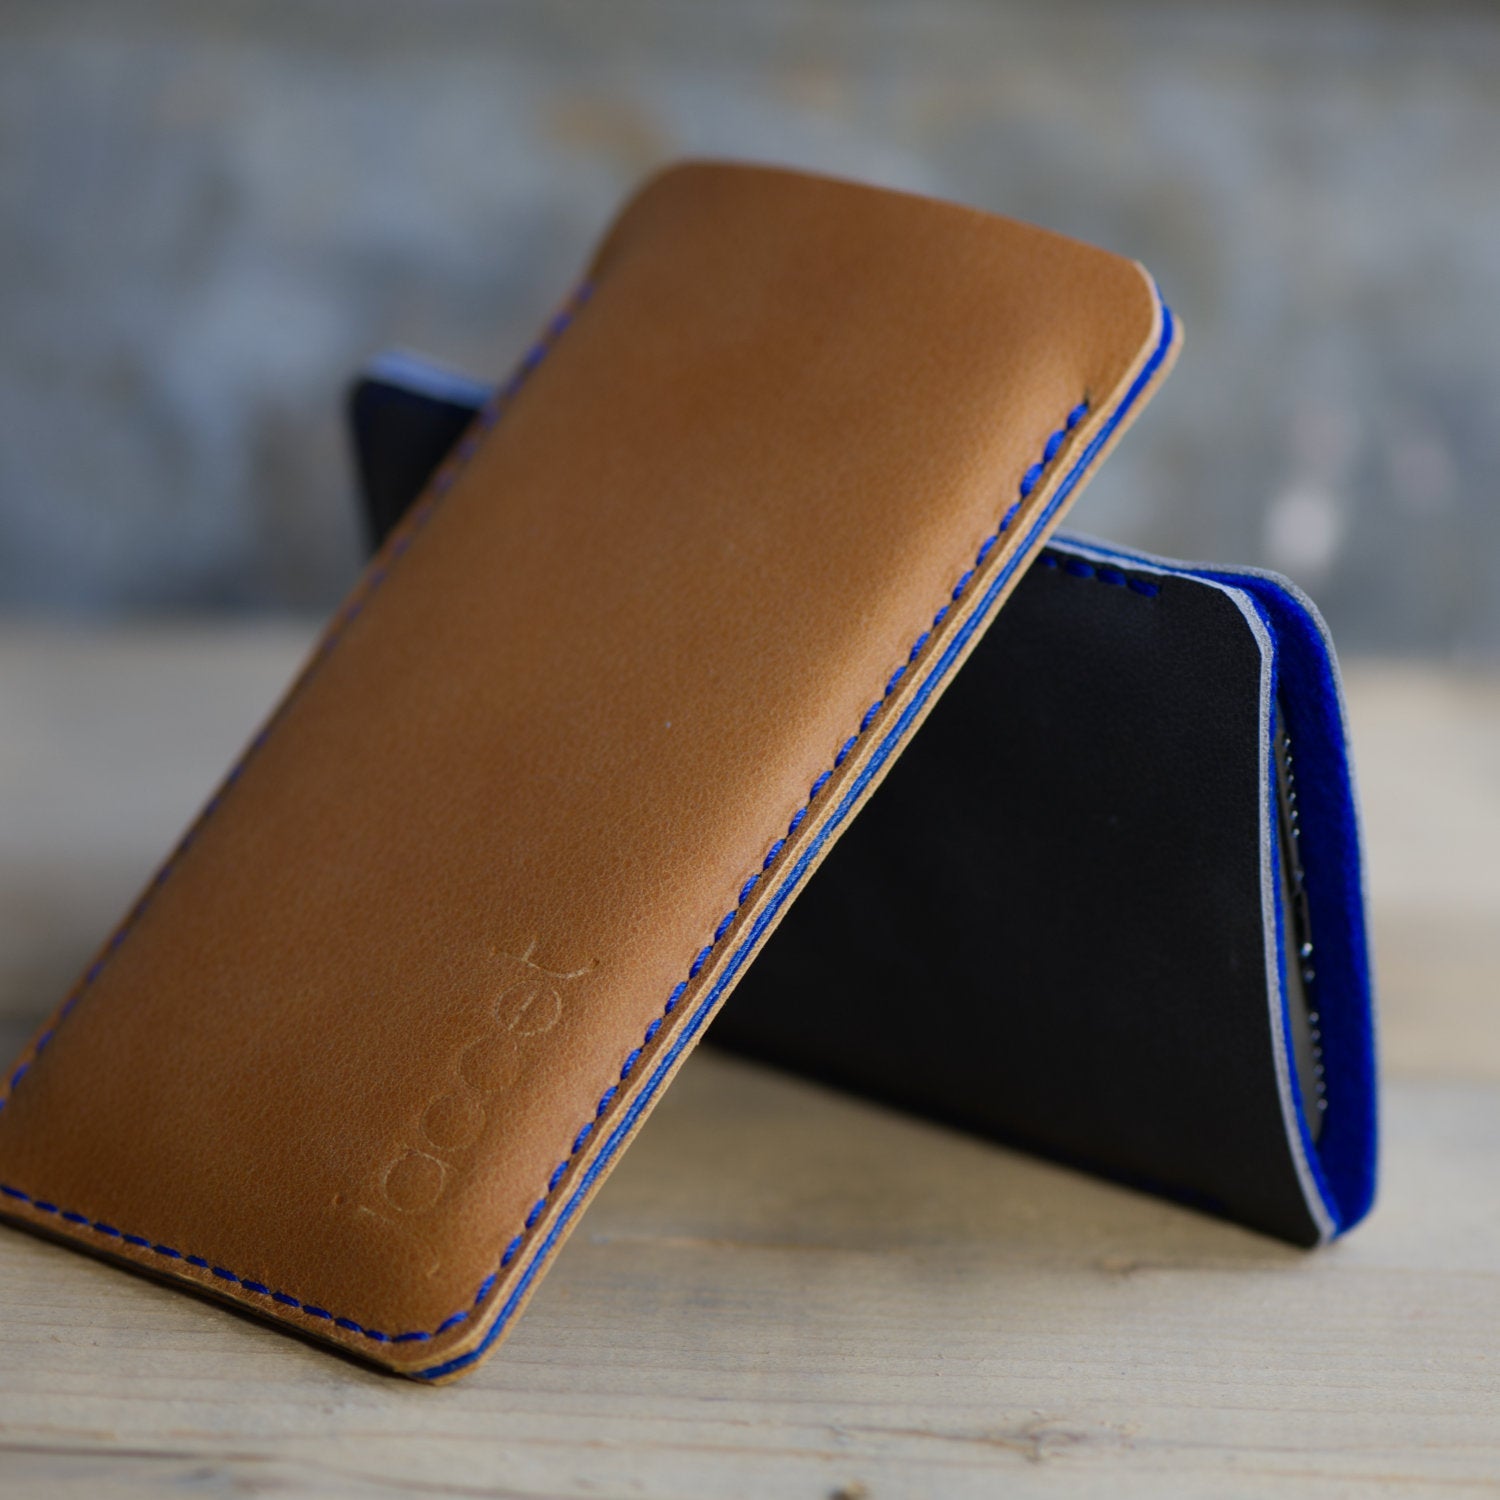 JACCET leather Samsung Galaxy sleeve - Cognac color leather with blue wool felt - 100% Handmade